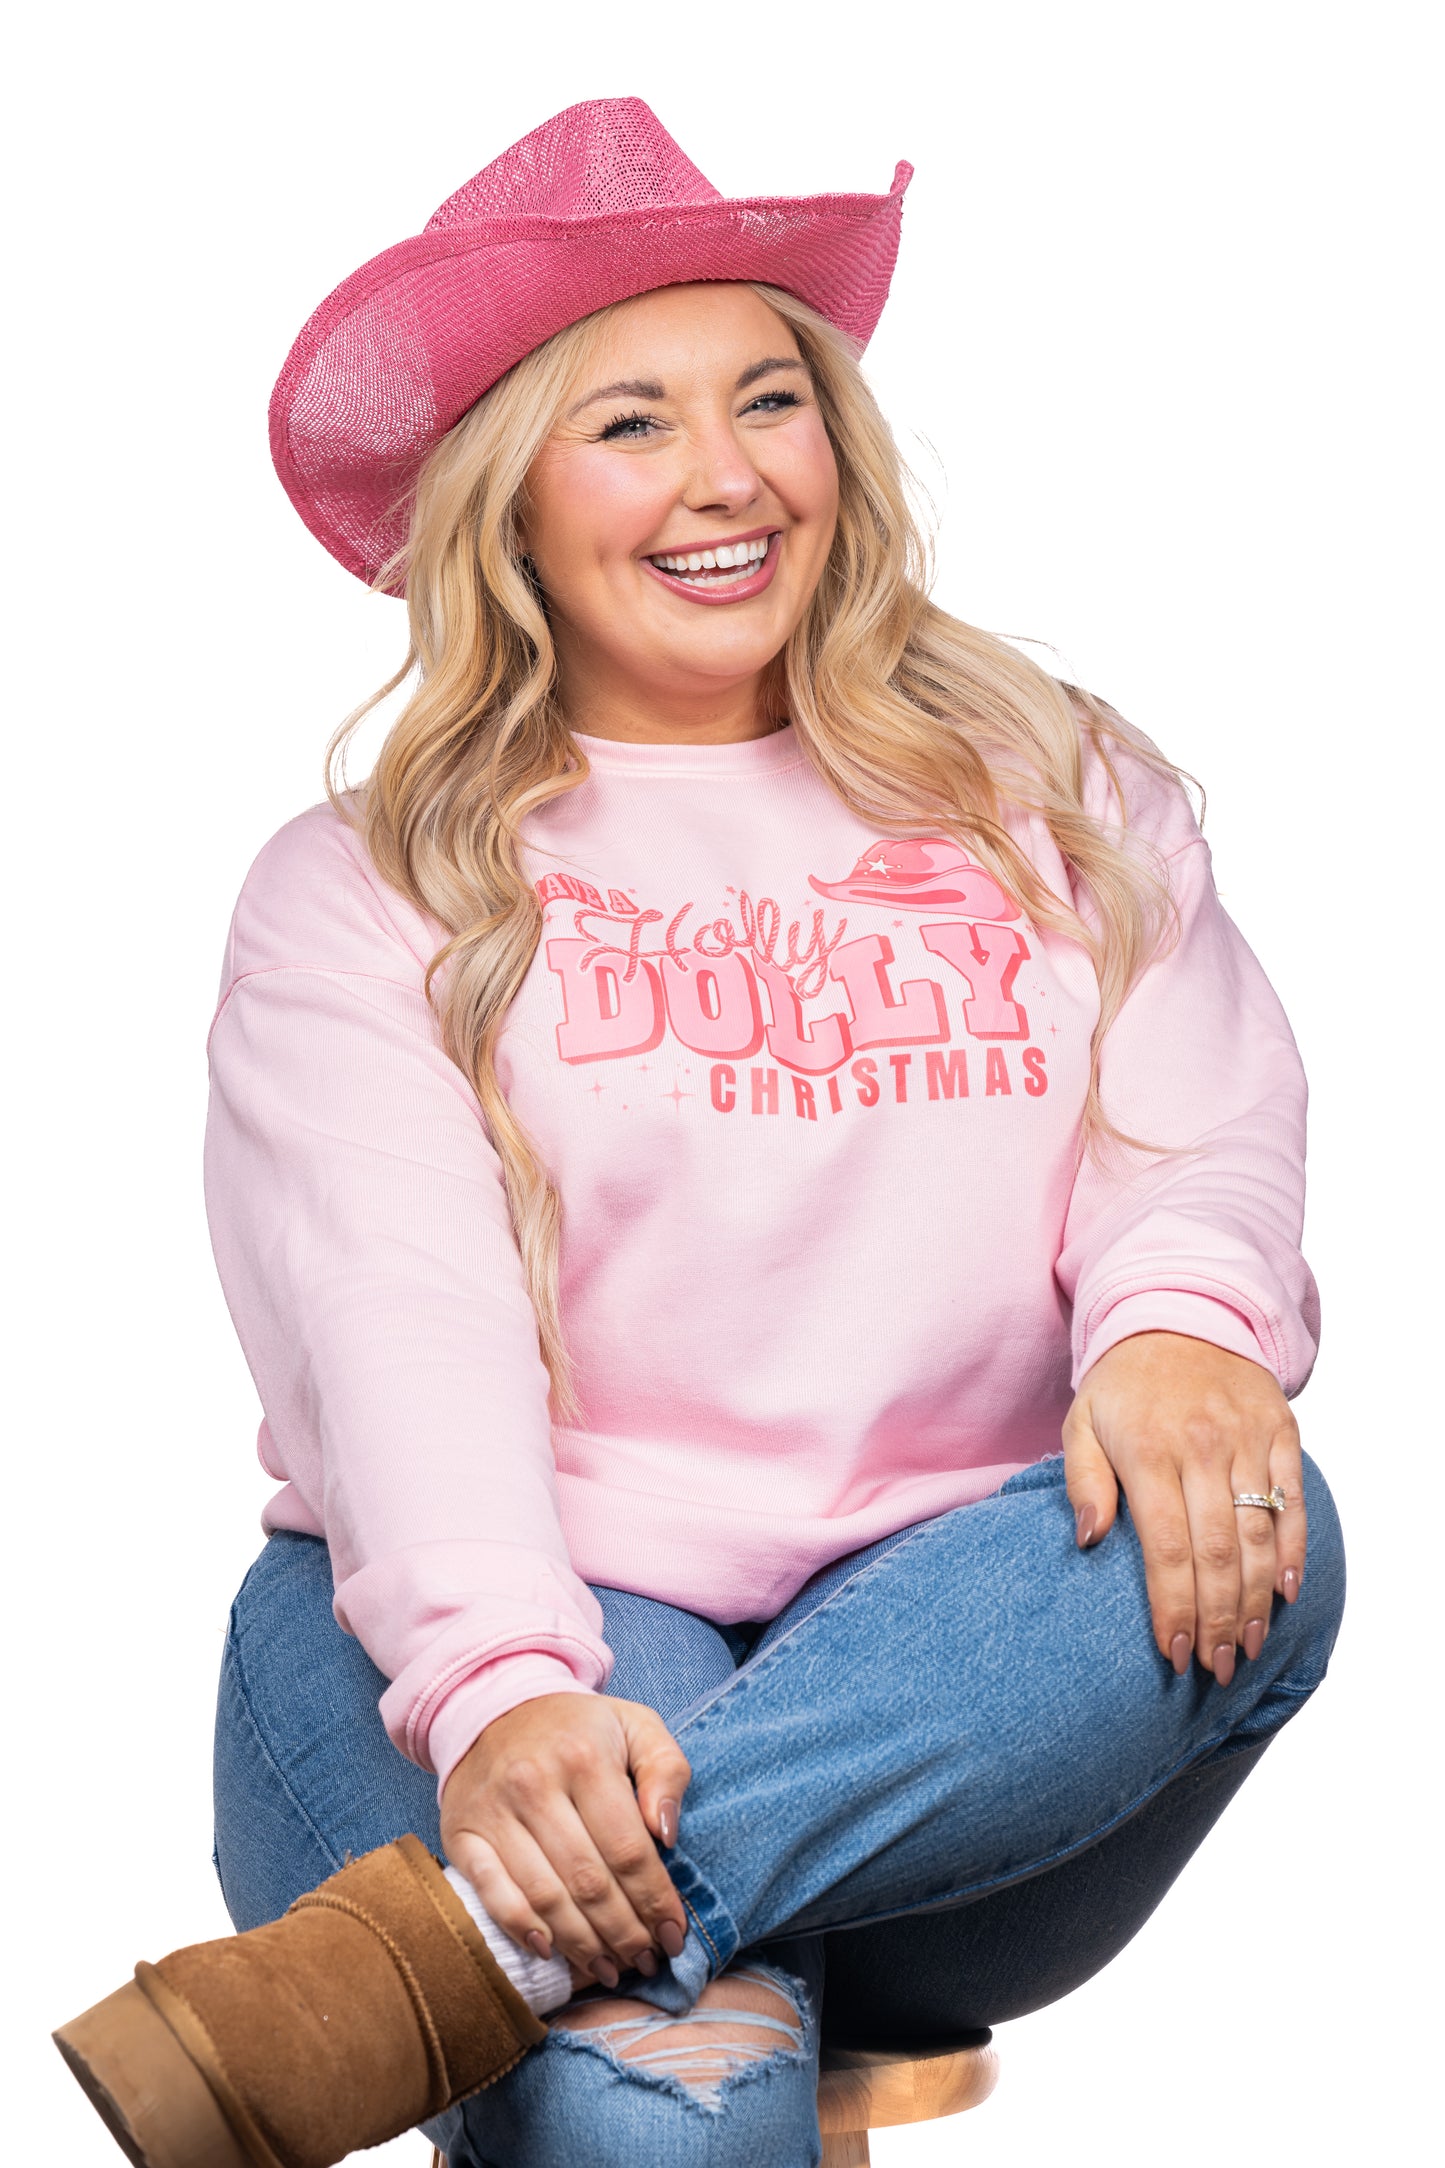 Holly Dolly Christmas - Sweatshirt (Light Pink)